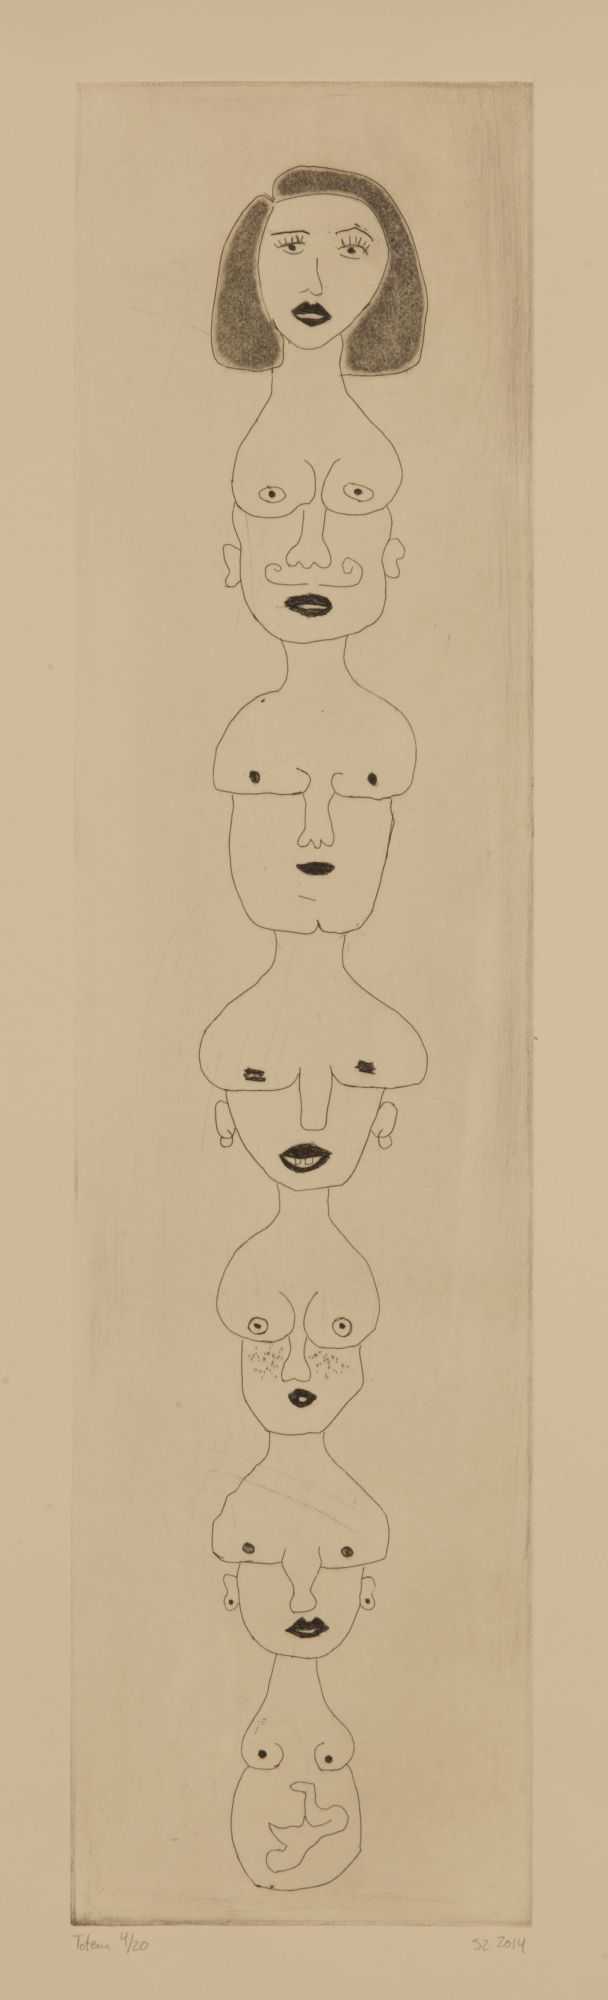 Print By Sara Zielinski: Totem At Childs Gallery